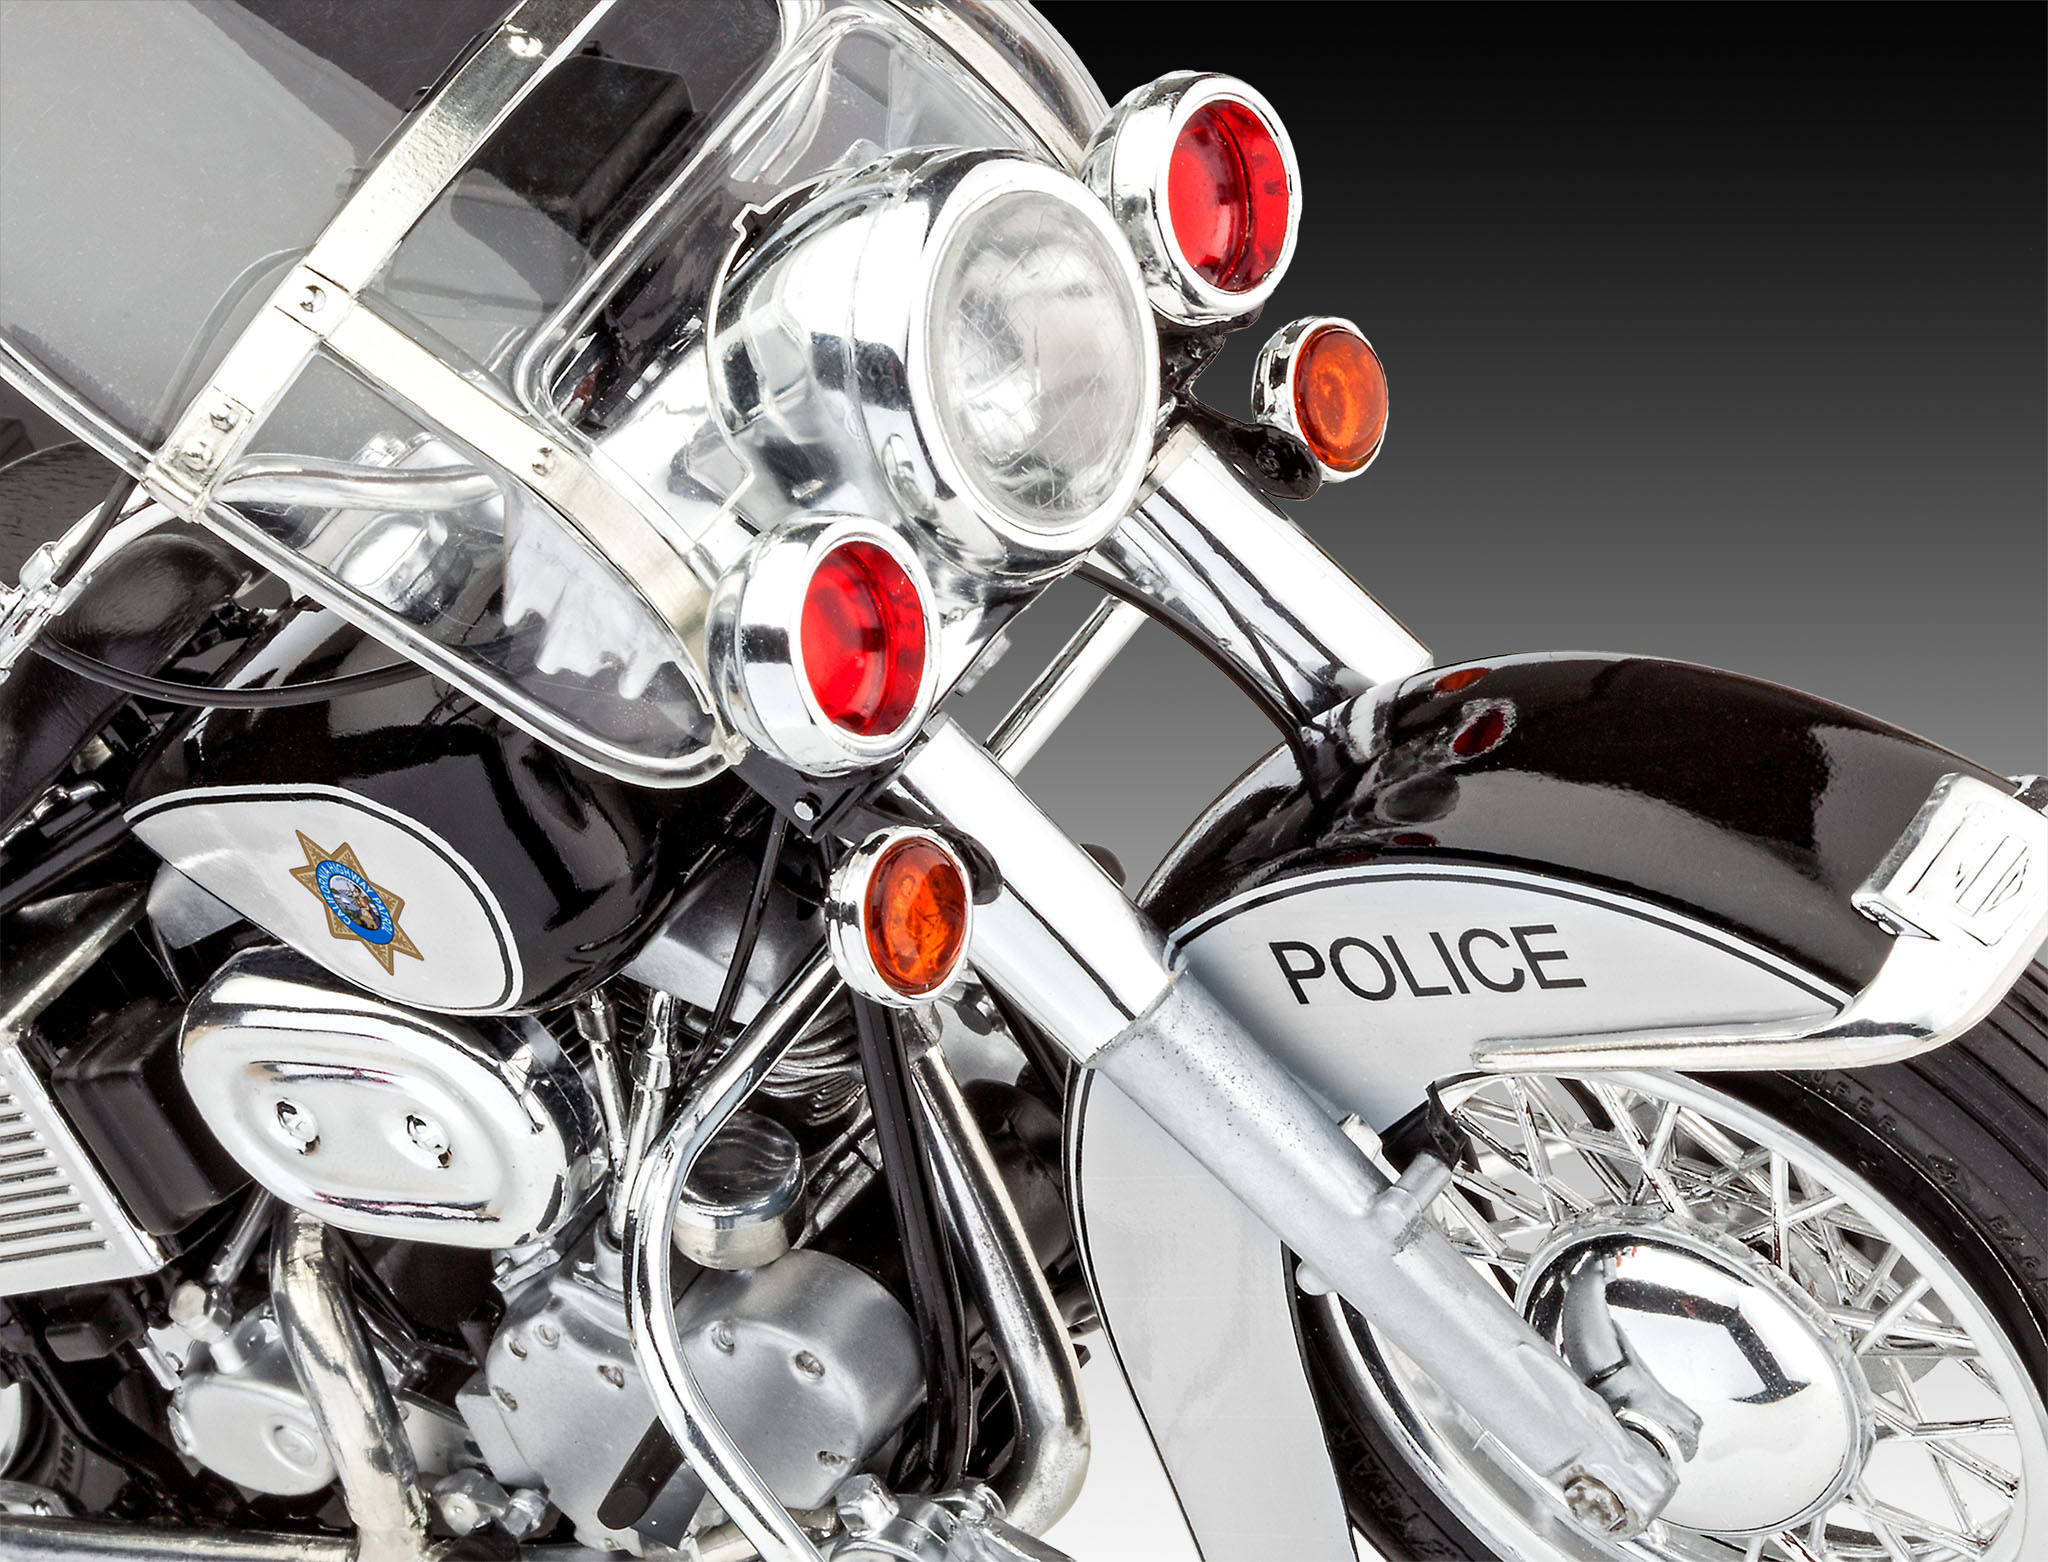 07915 Revell 1:8 Полицейский мотоцикл США # 2 hobbyplus.ru